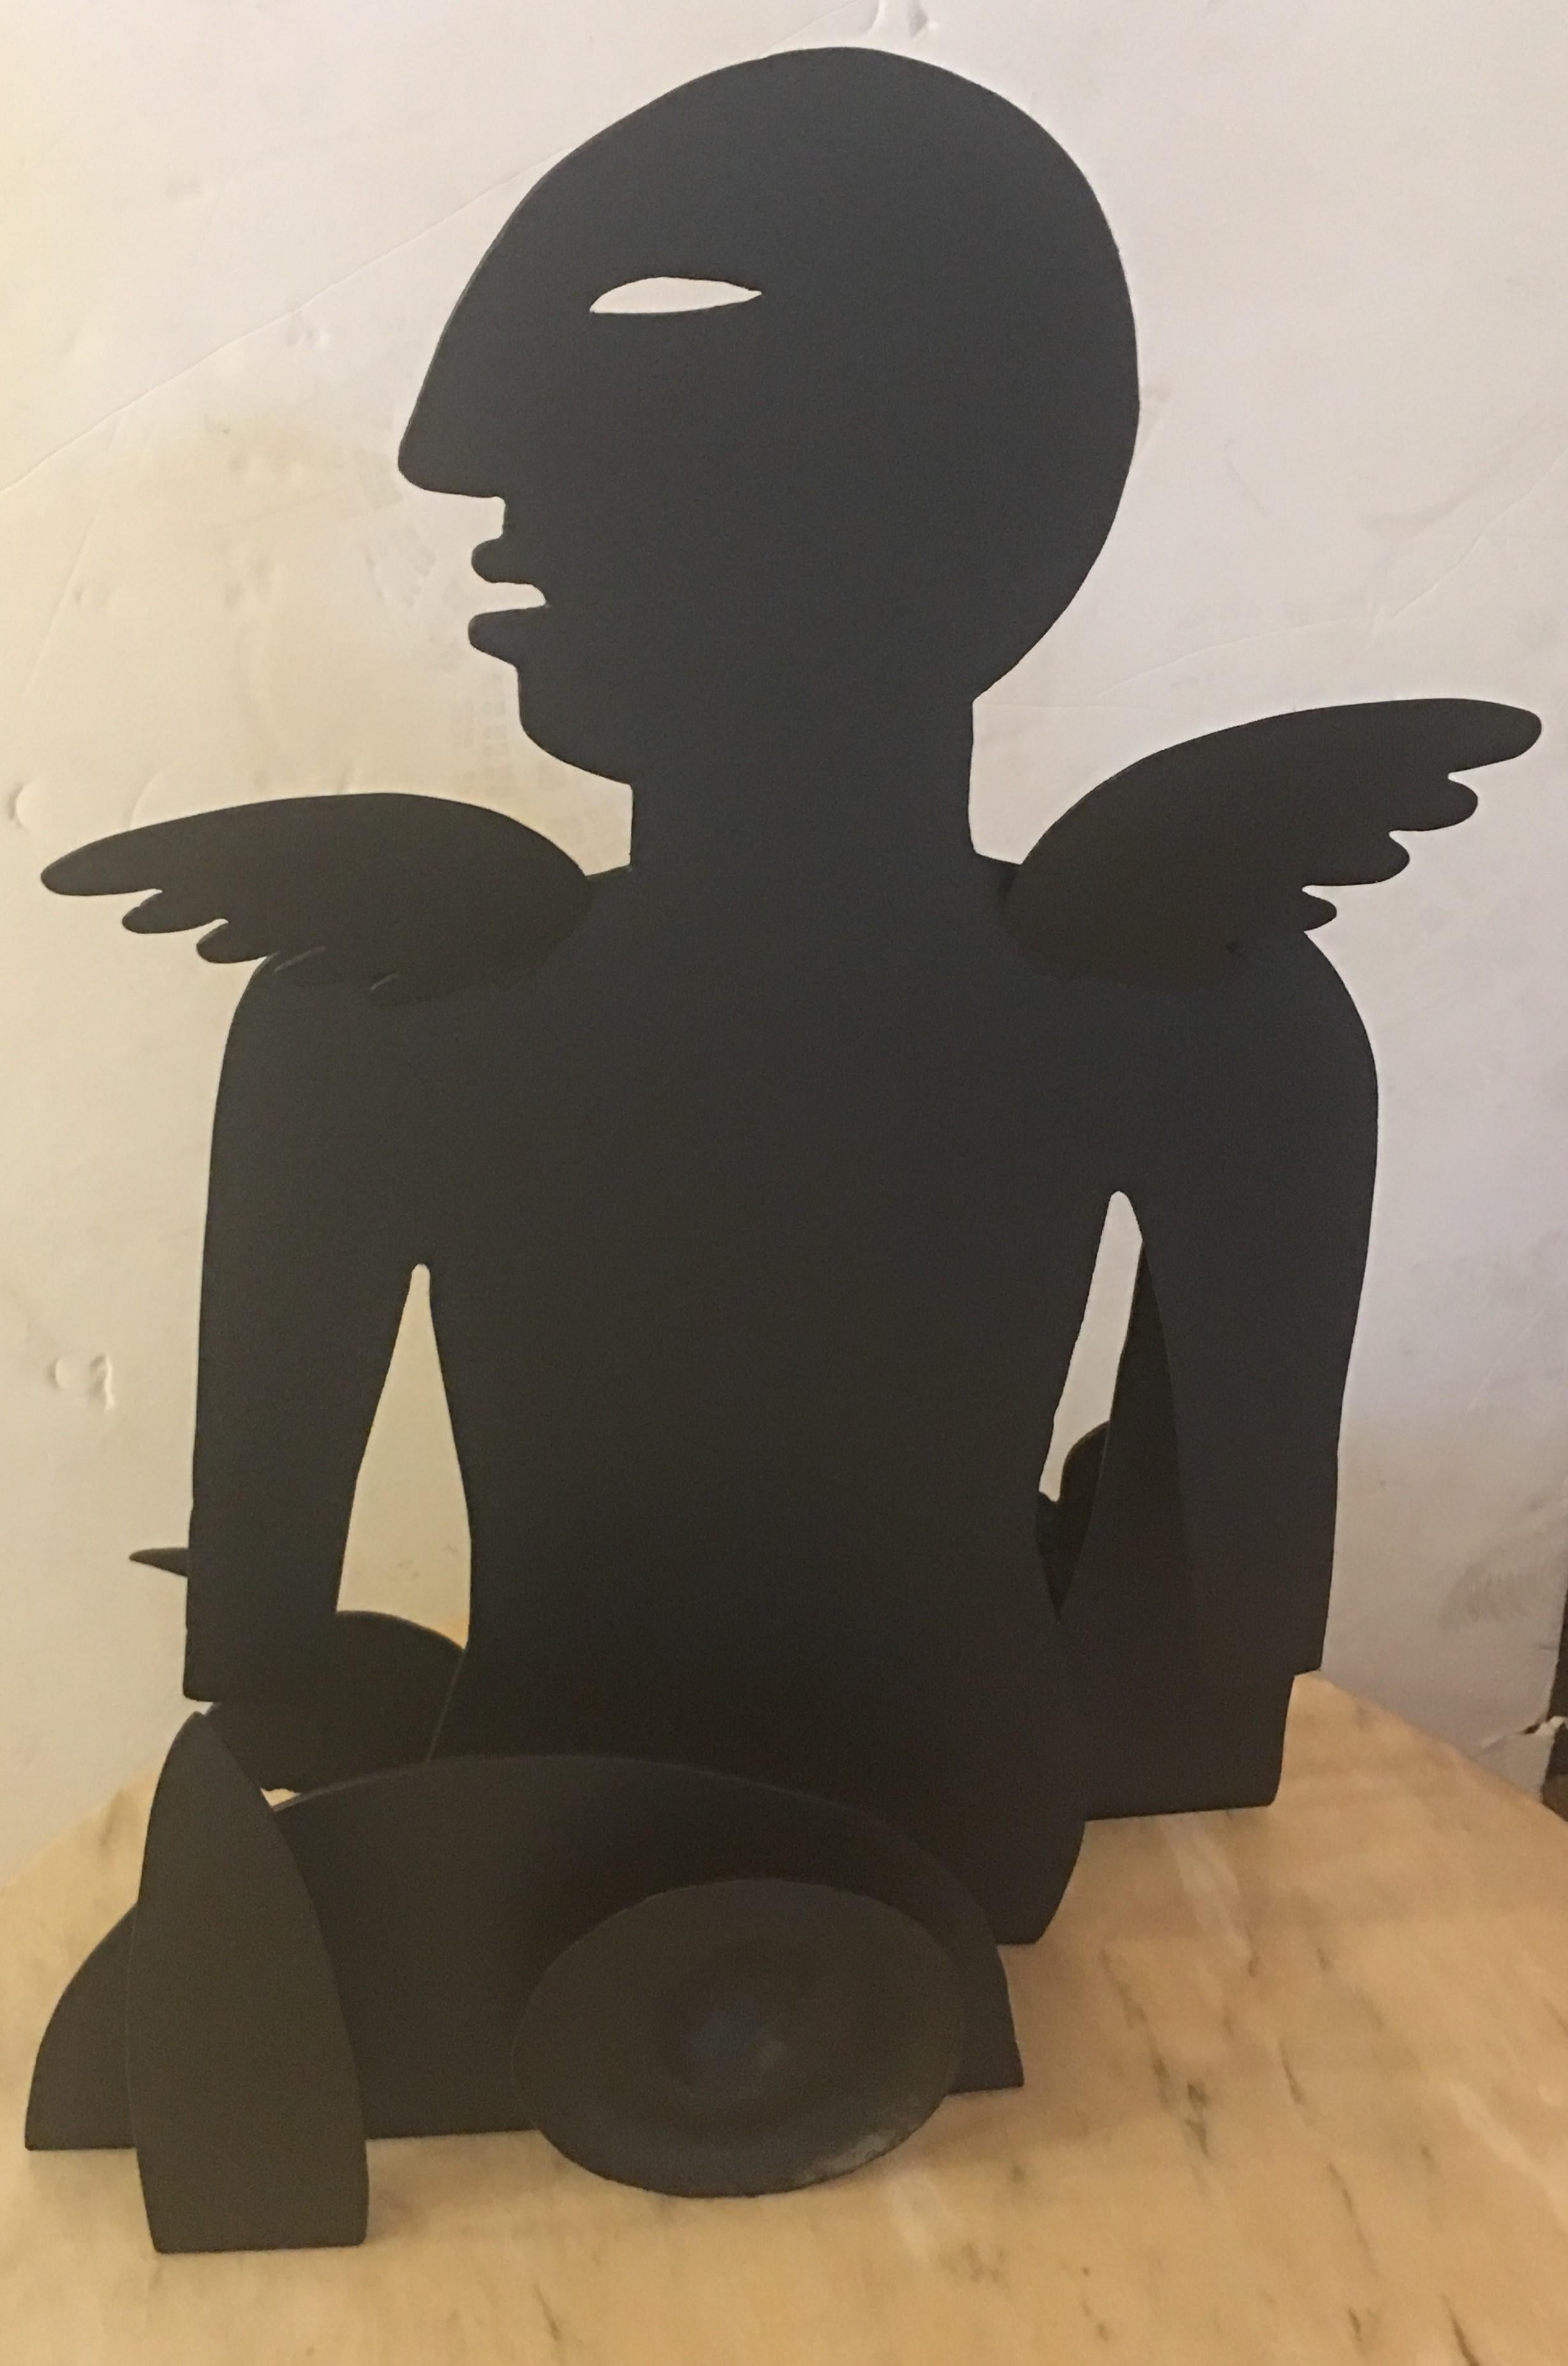 Angel sculpture in sheet metal by Mexican artist Jesus Tellosa.
Born in 1936, Tellosa grew up in Guadalajara and California. His formal art studies began at the Instituto Cultural Mexico-Nortamericano in Guadalajara (1958-1960). By the early